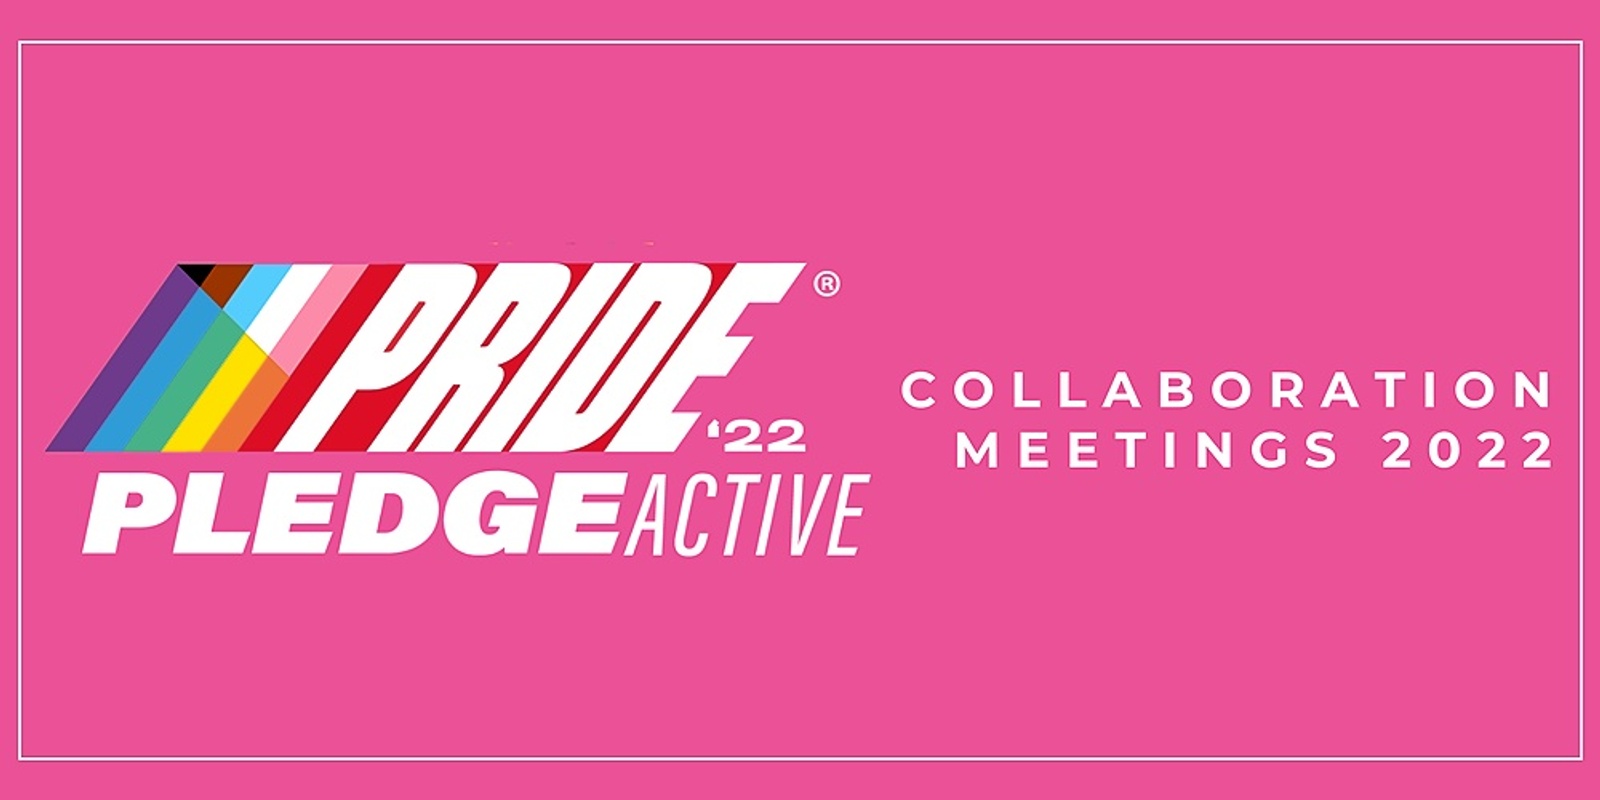 Pride Pledge ACTIVE Collaboration Meetings 2022